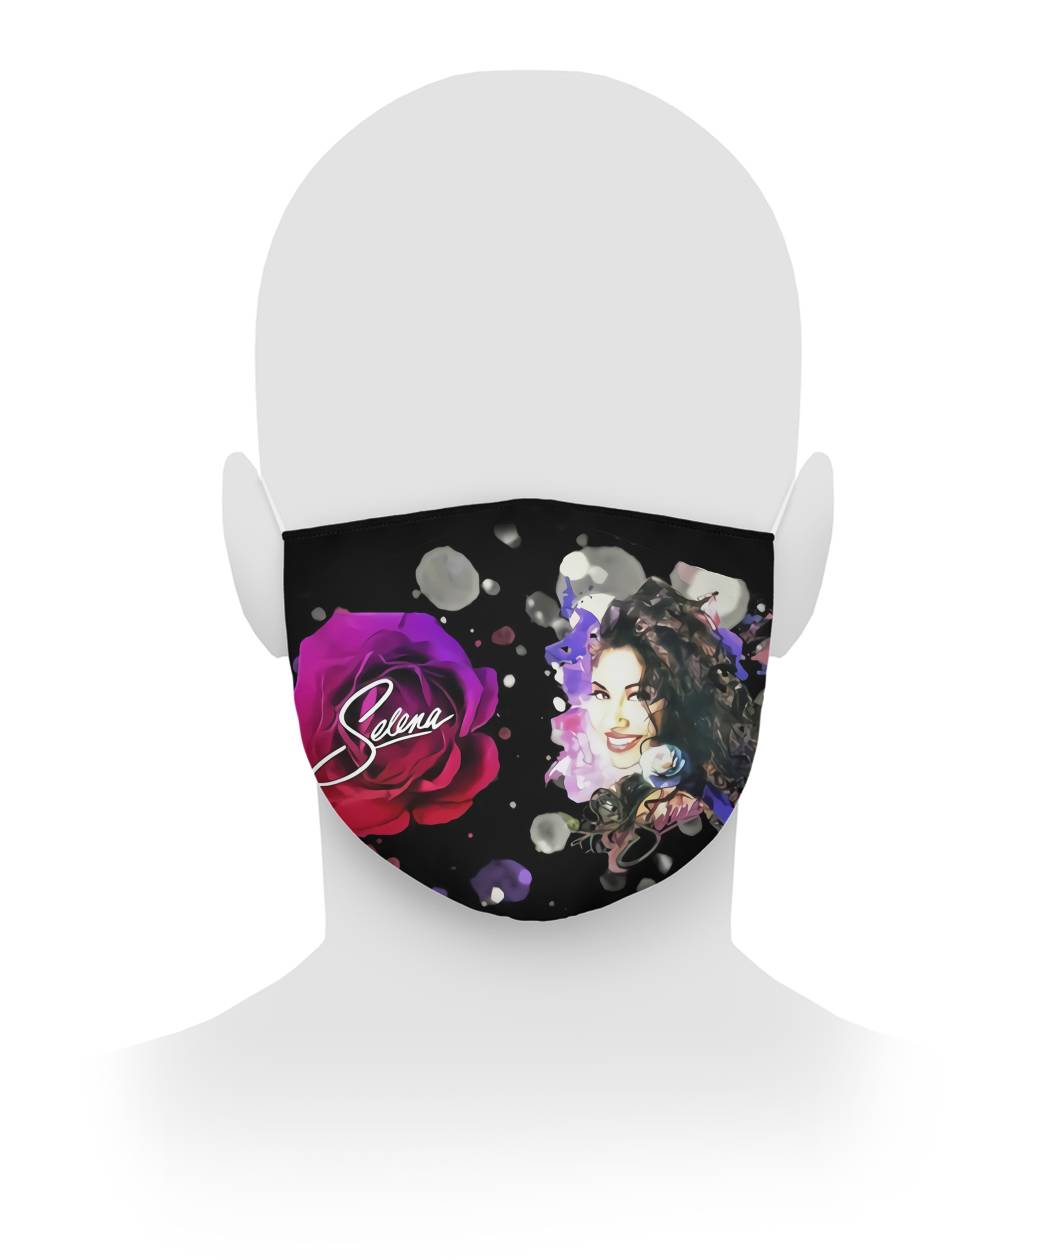 Selena 3d face mask - detail